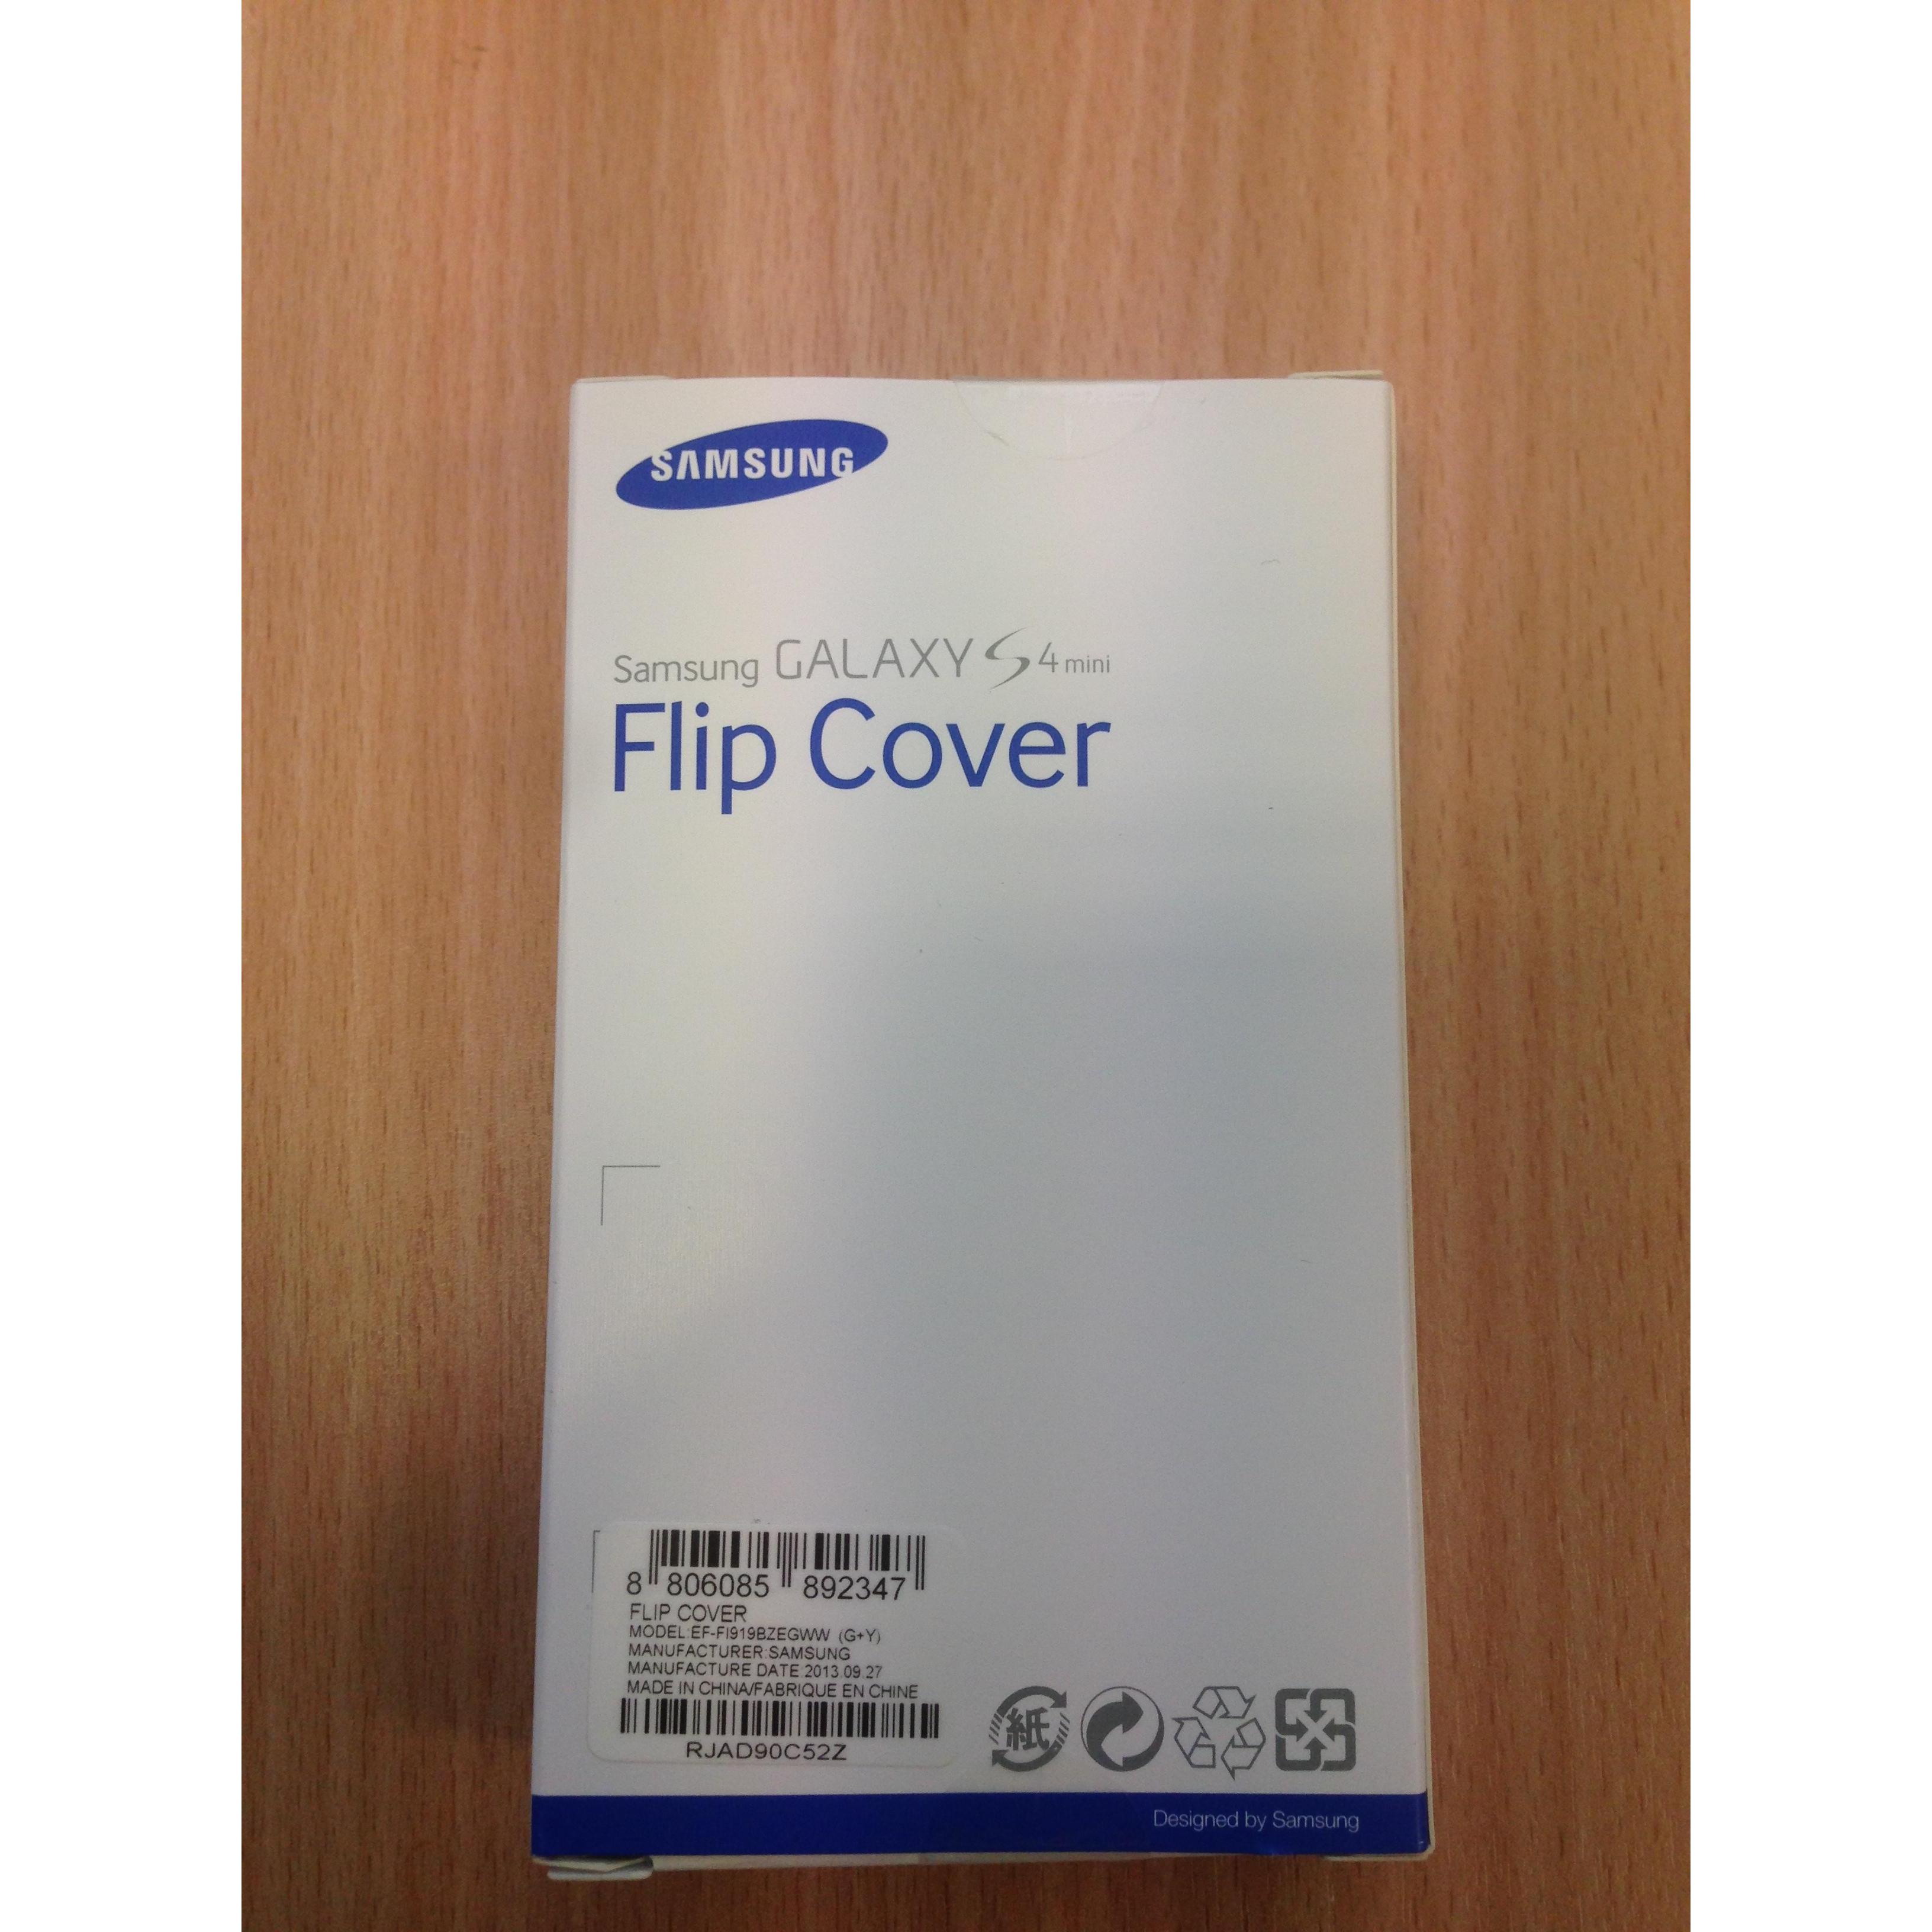 Samsung Galaxy S4 mini Flip Cover Wholesale Suppliers